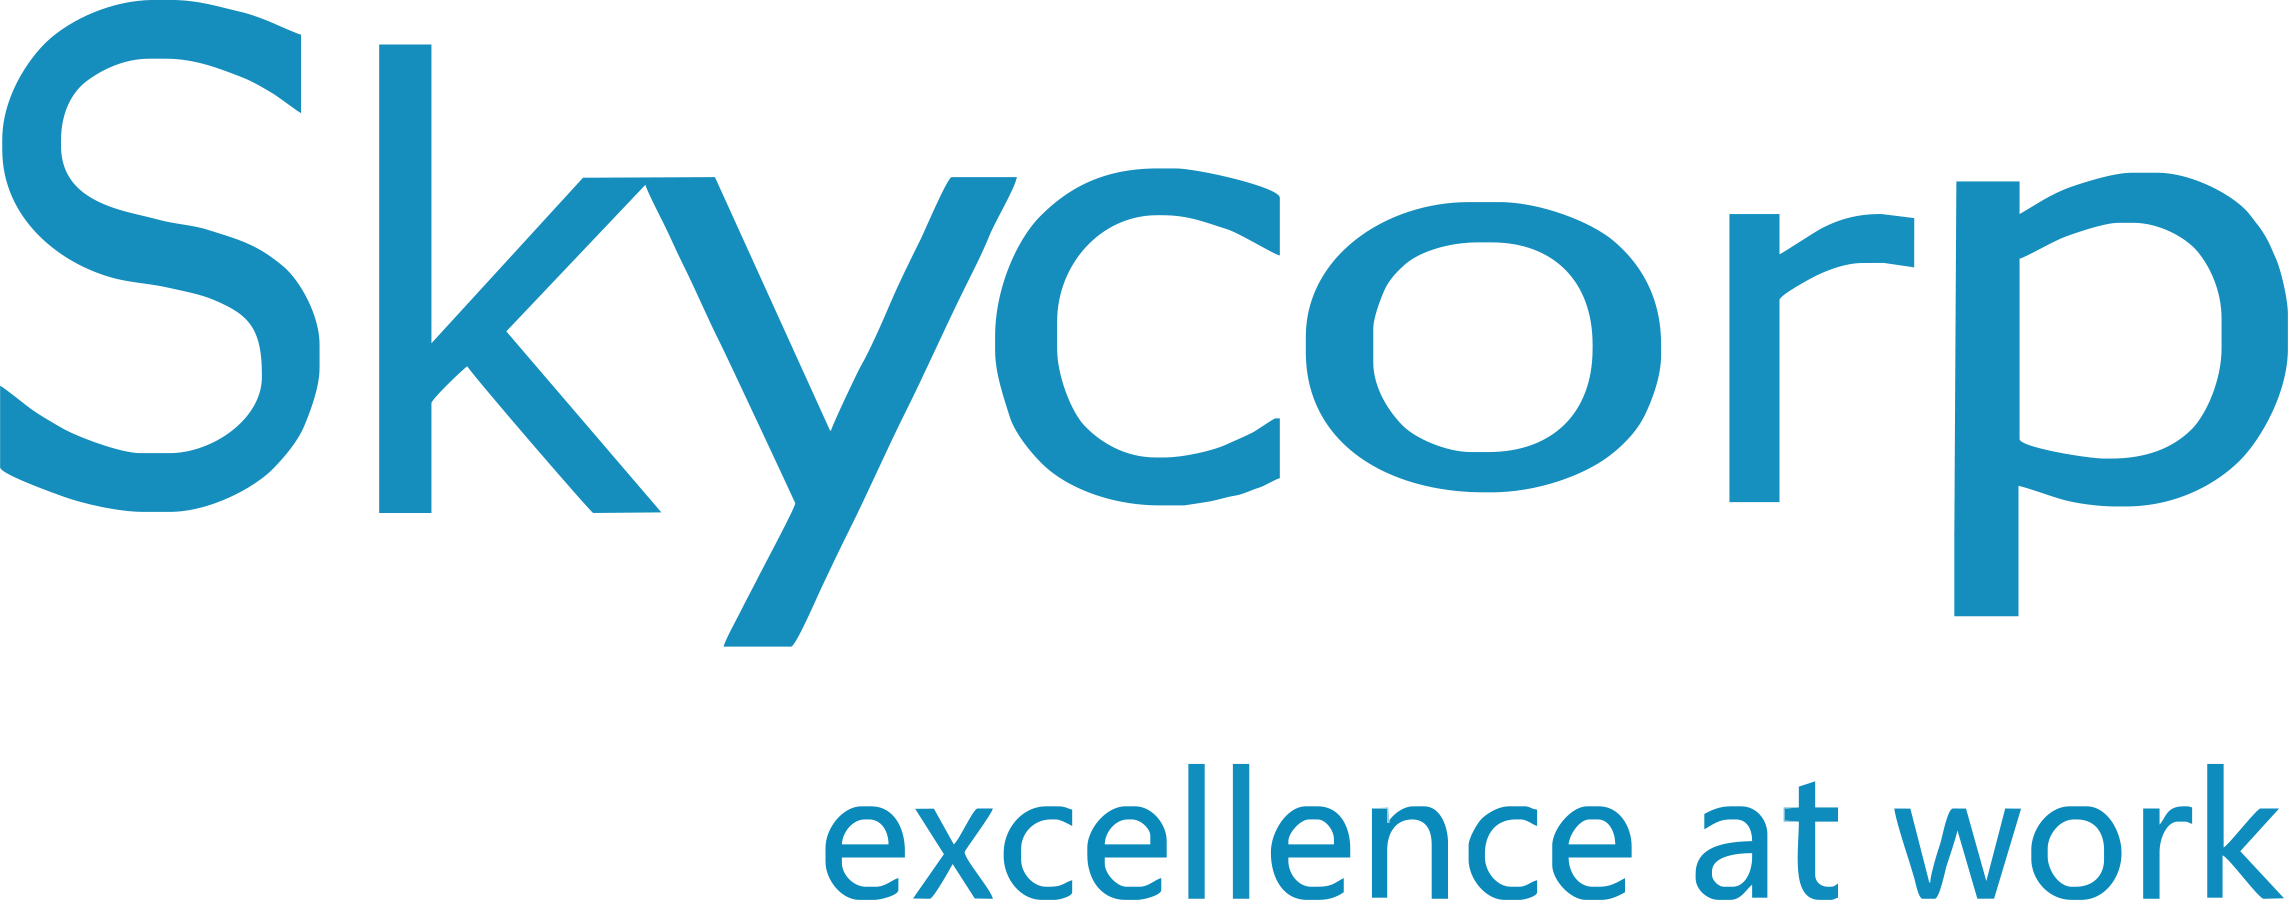 skycorp logo NB